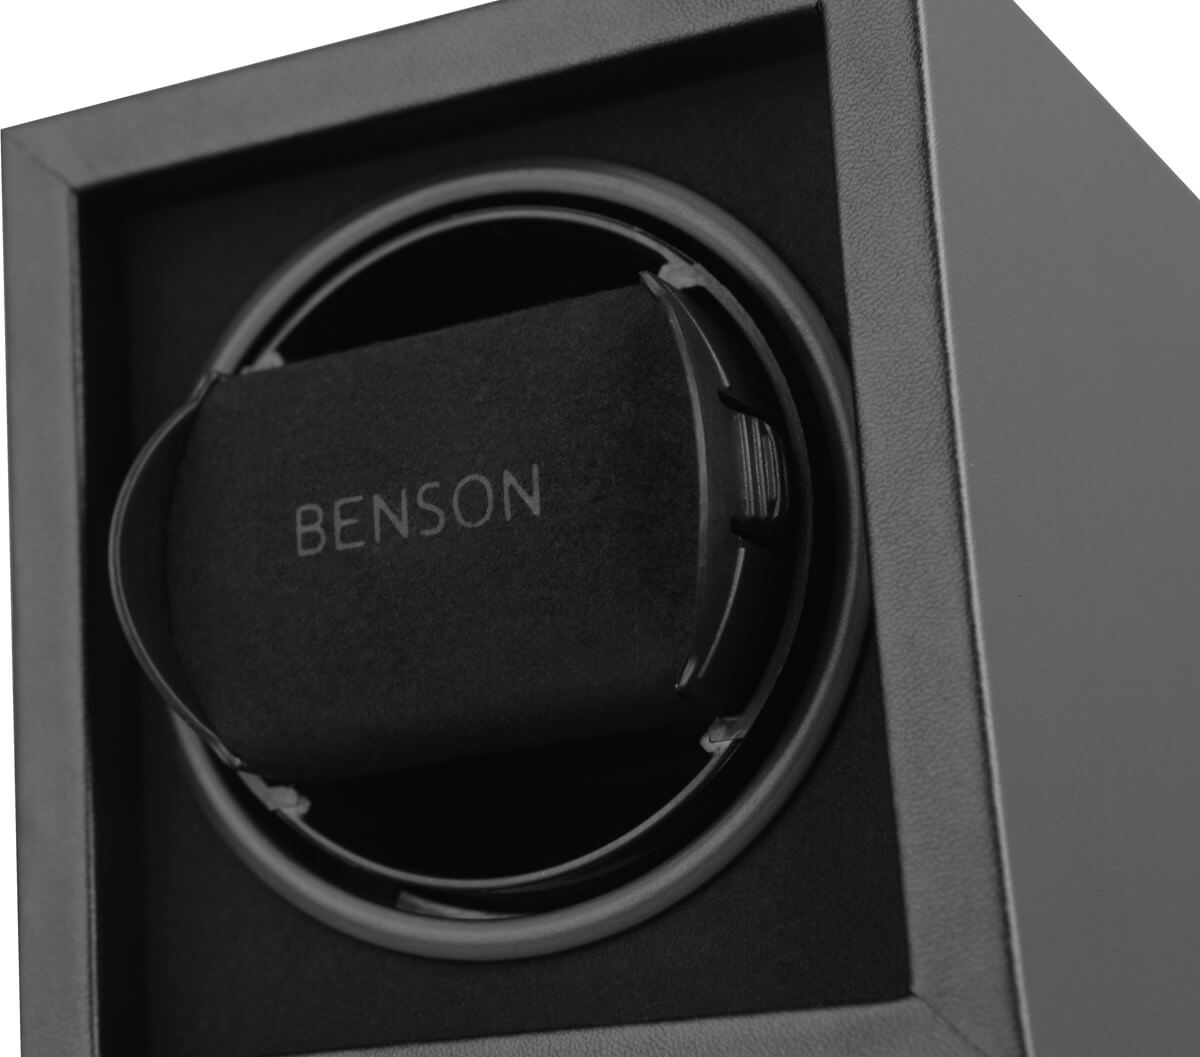 Benson Compact 1.17. Black Leather